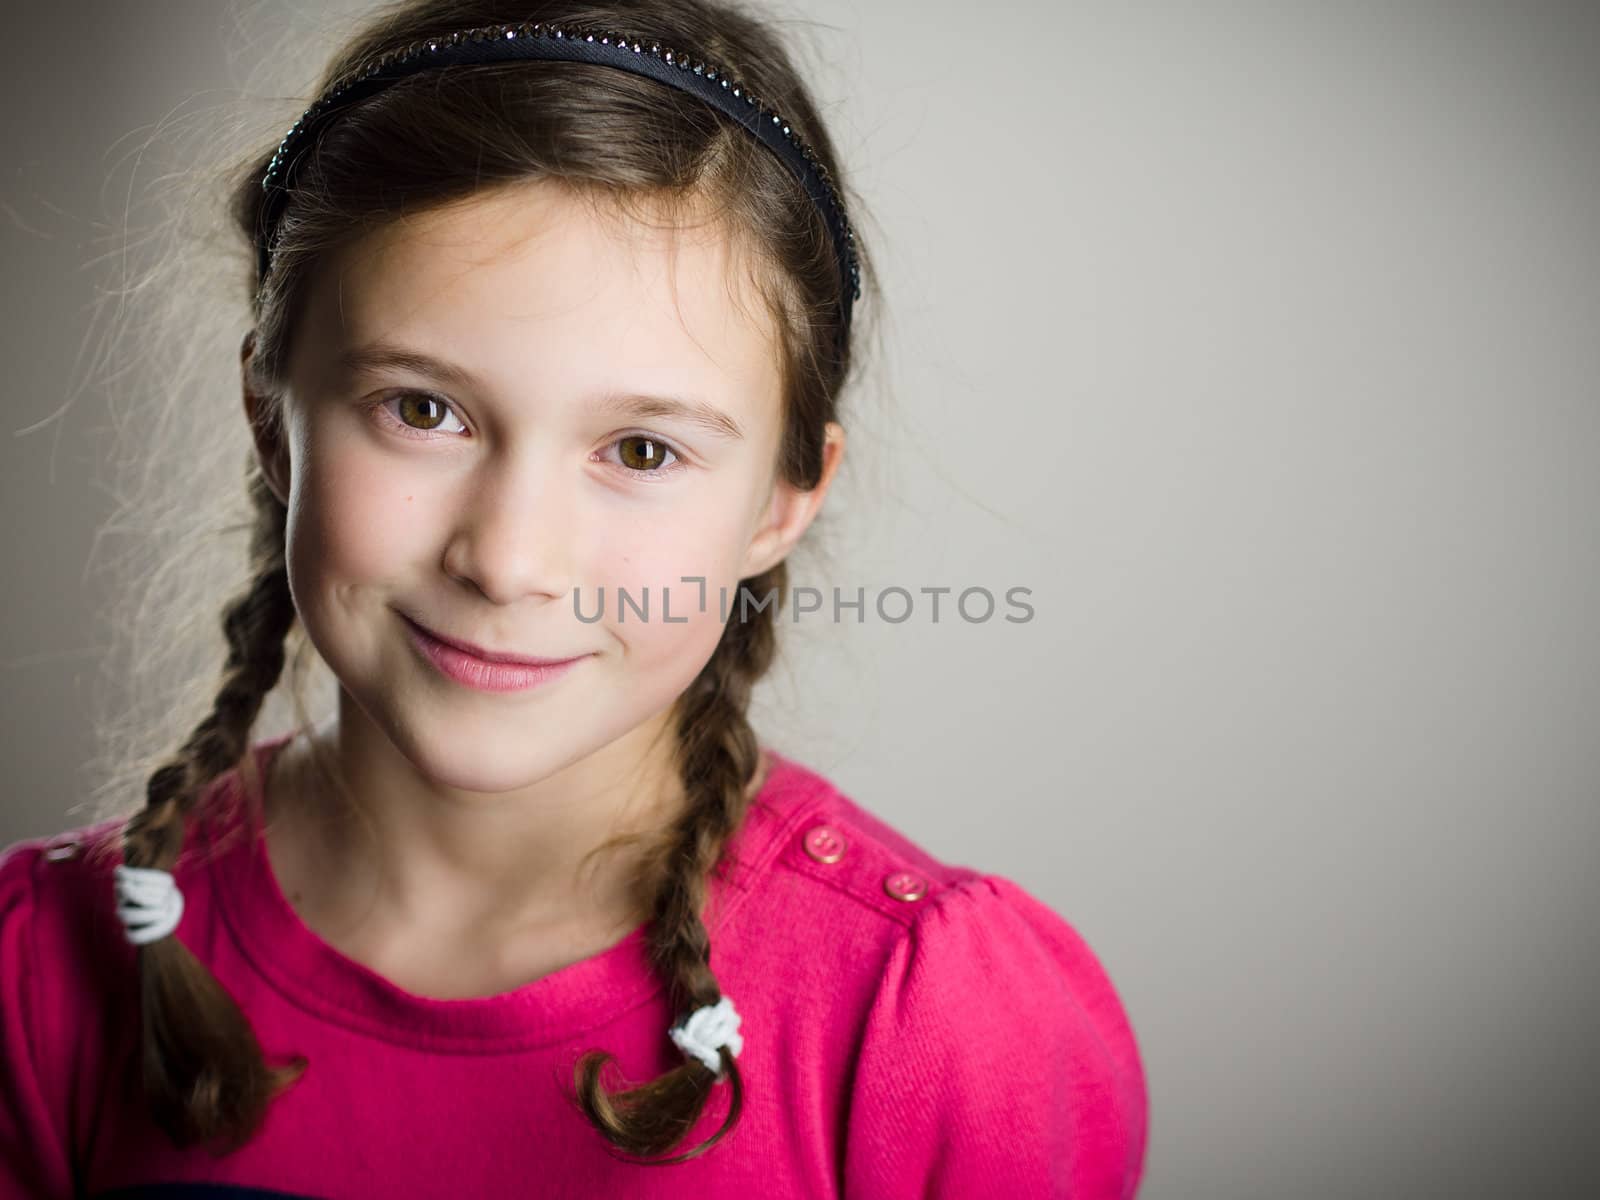 Cute little girl smiling in studio